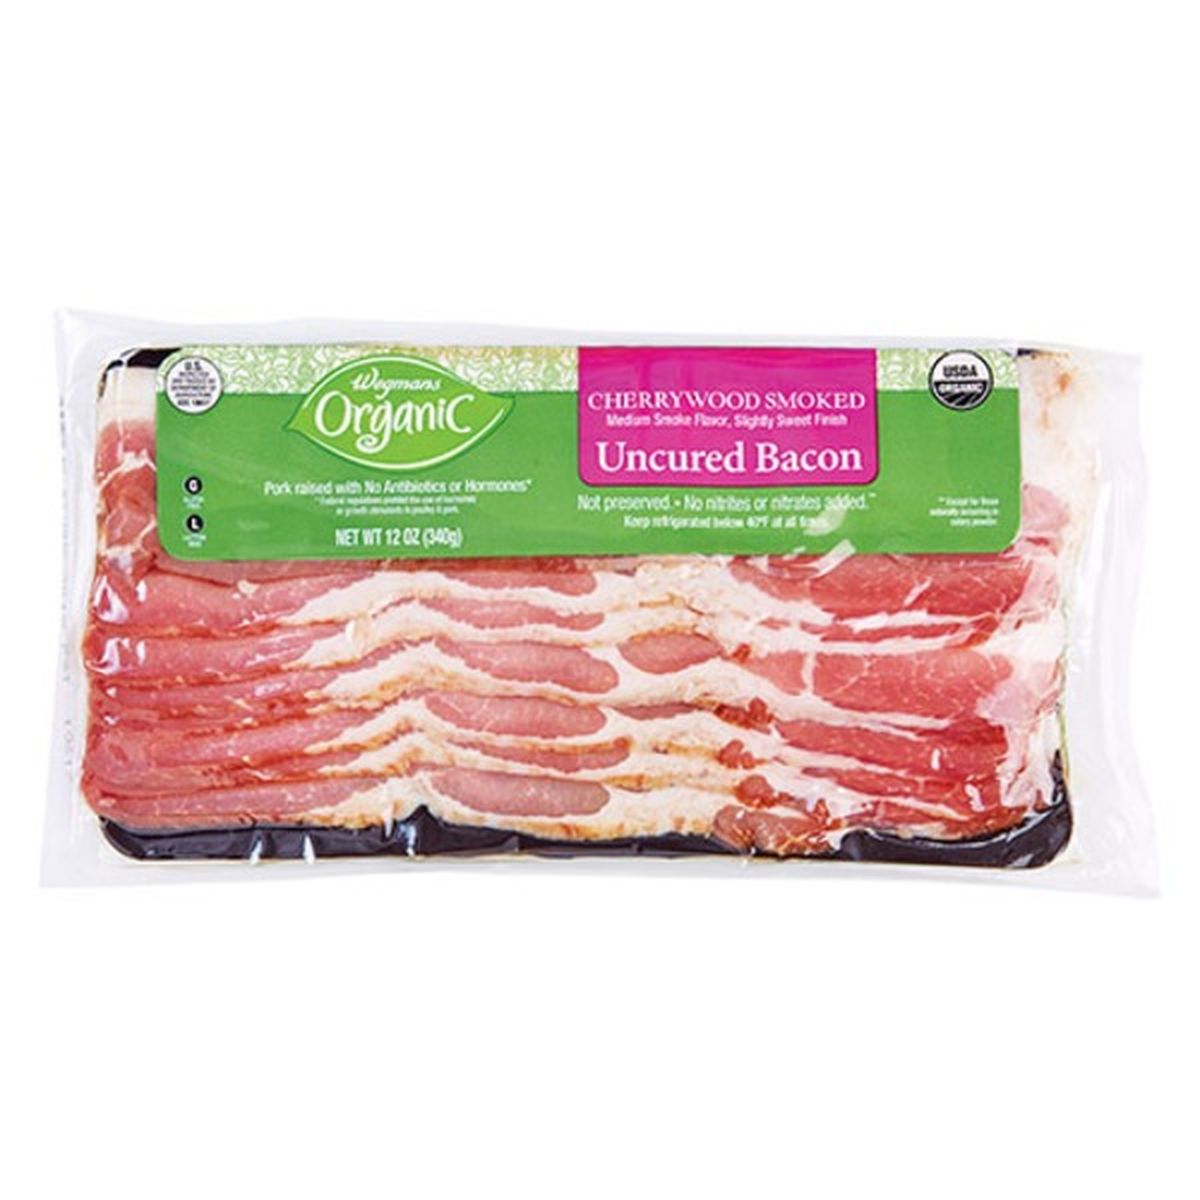 Calories in Wegmans Organic Cherrywood Smoked Uncured Bacon